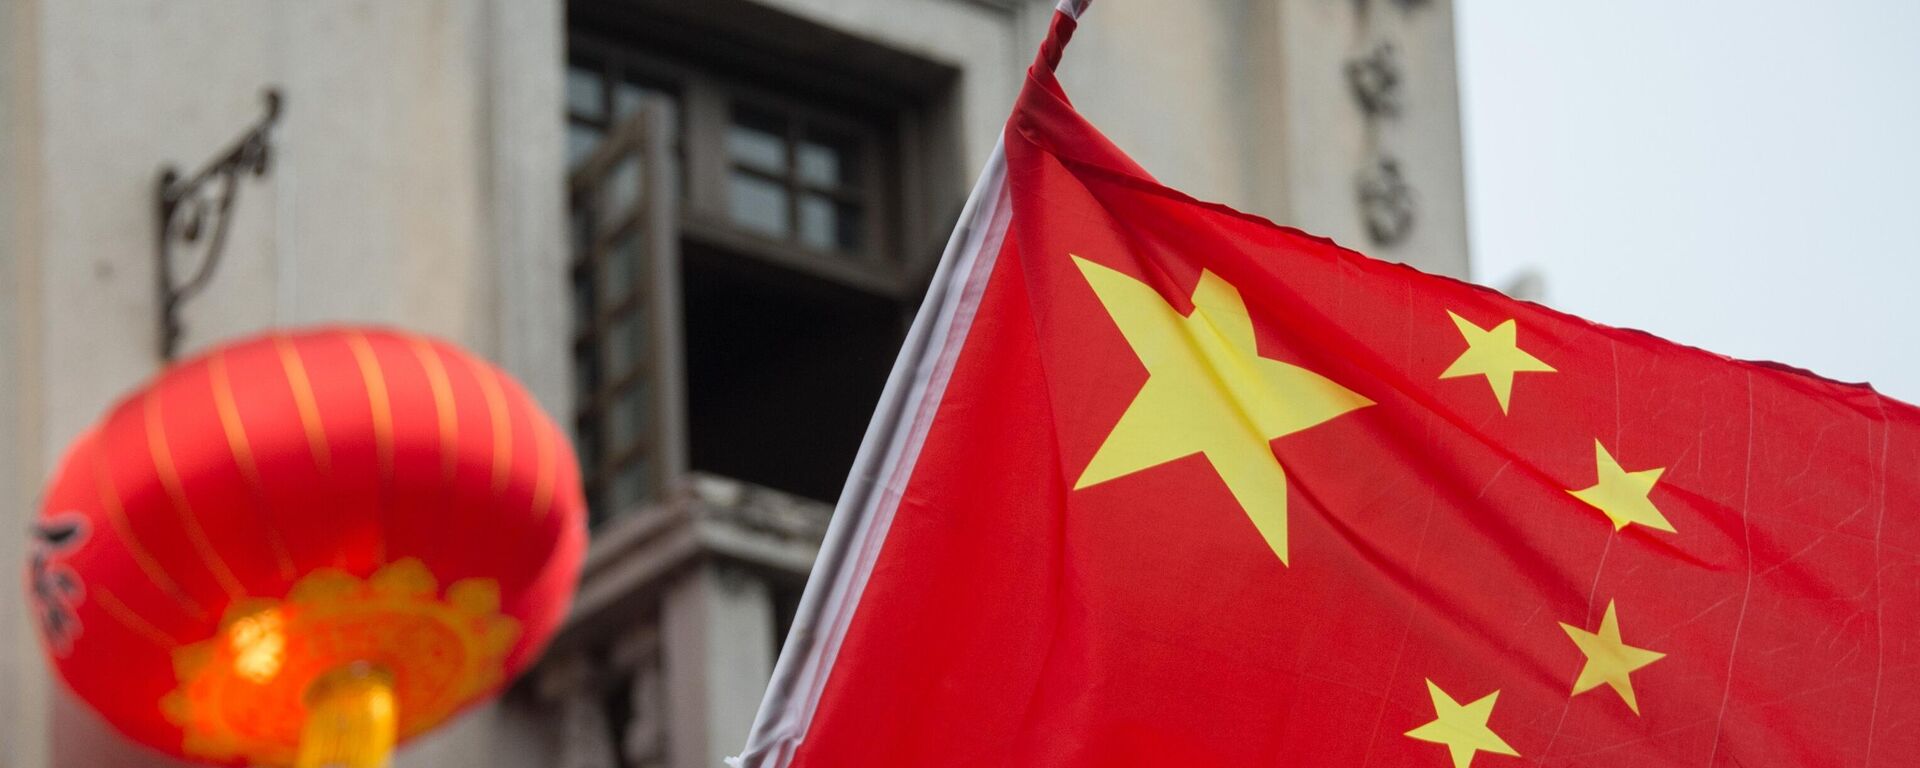 Флаг Китая в Ханчжоу в КНР, архивное фото - Sputnik Lietuva, 1920, 04.01.2022